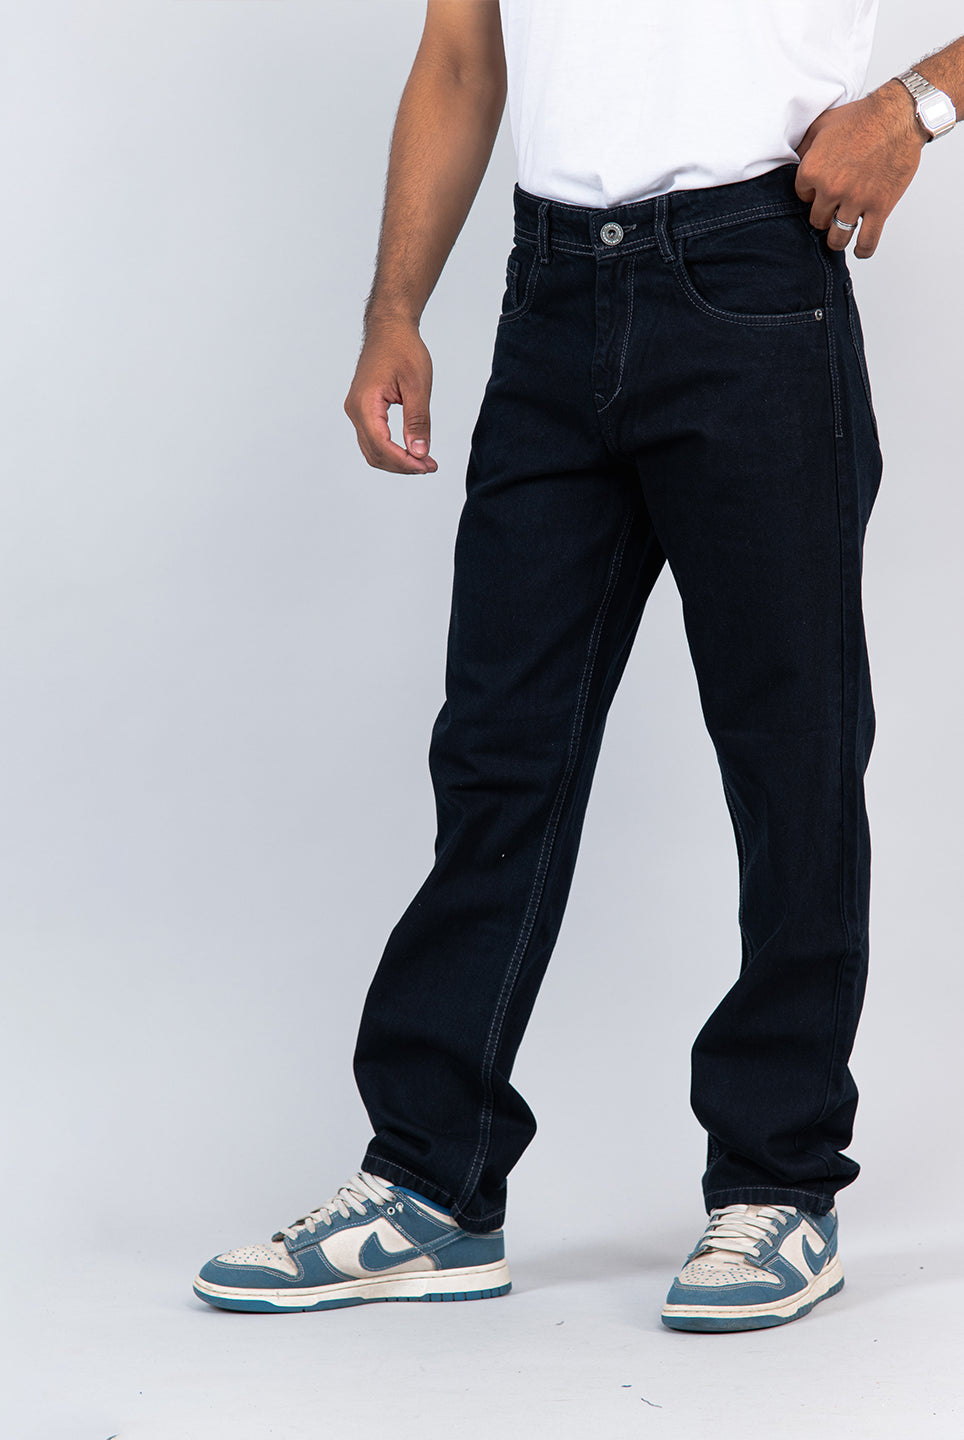 Navy blue denim jeans